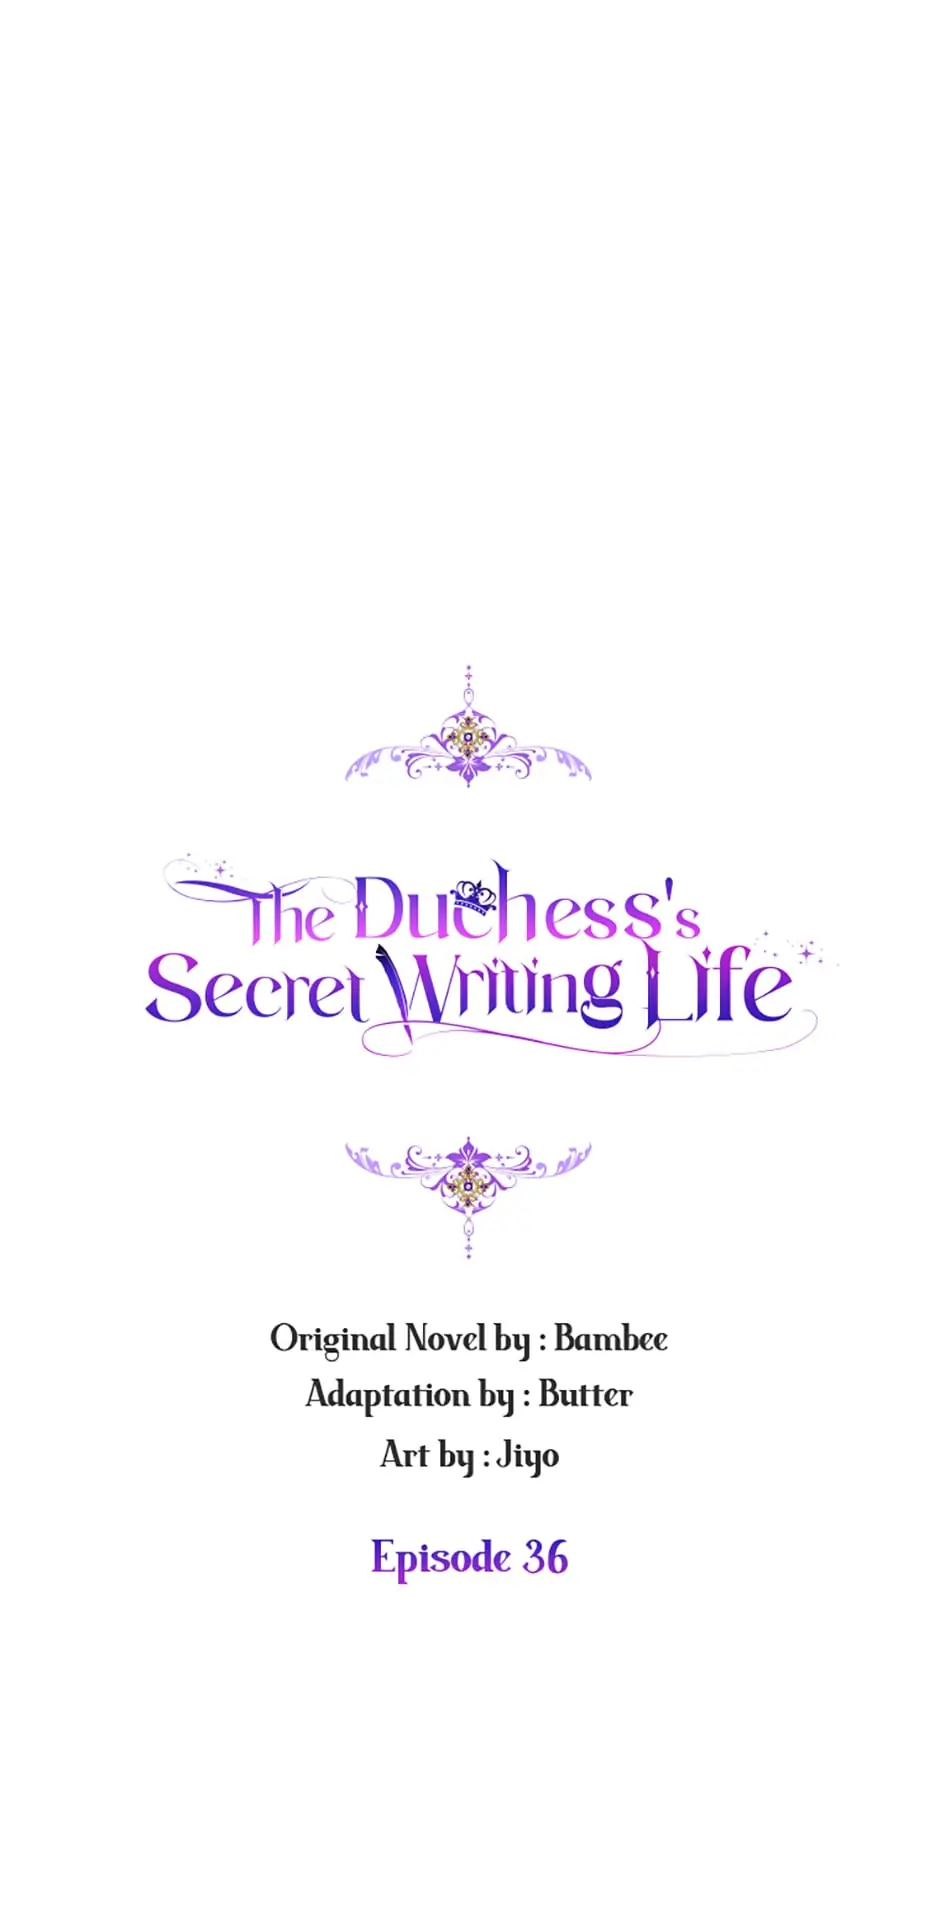 The Duchess’ Secret Writings chapter 36